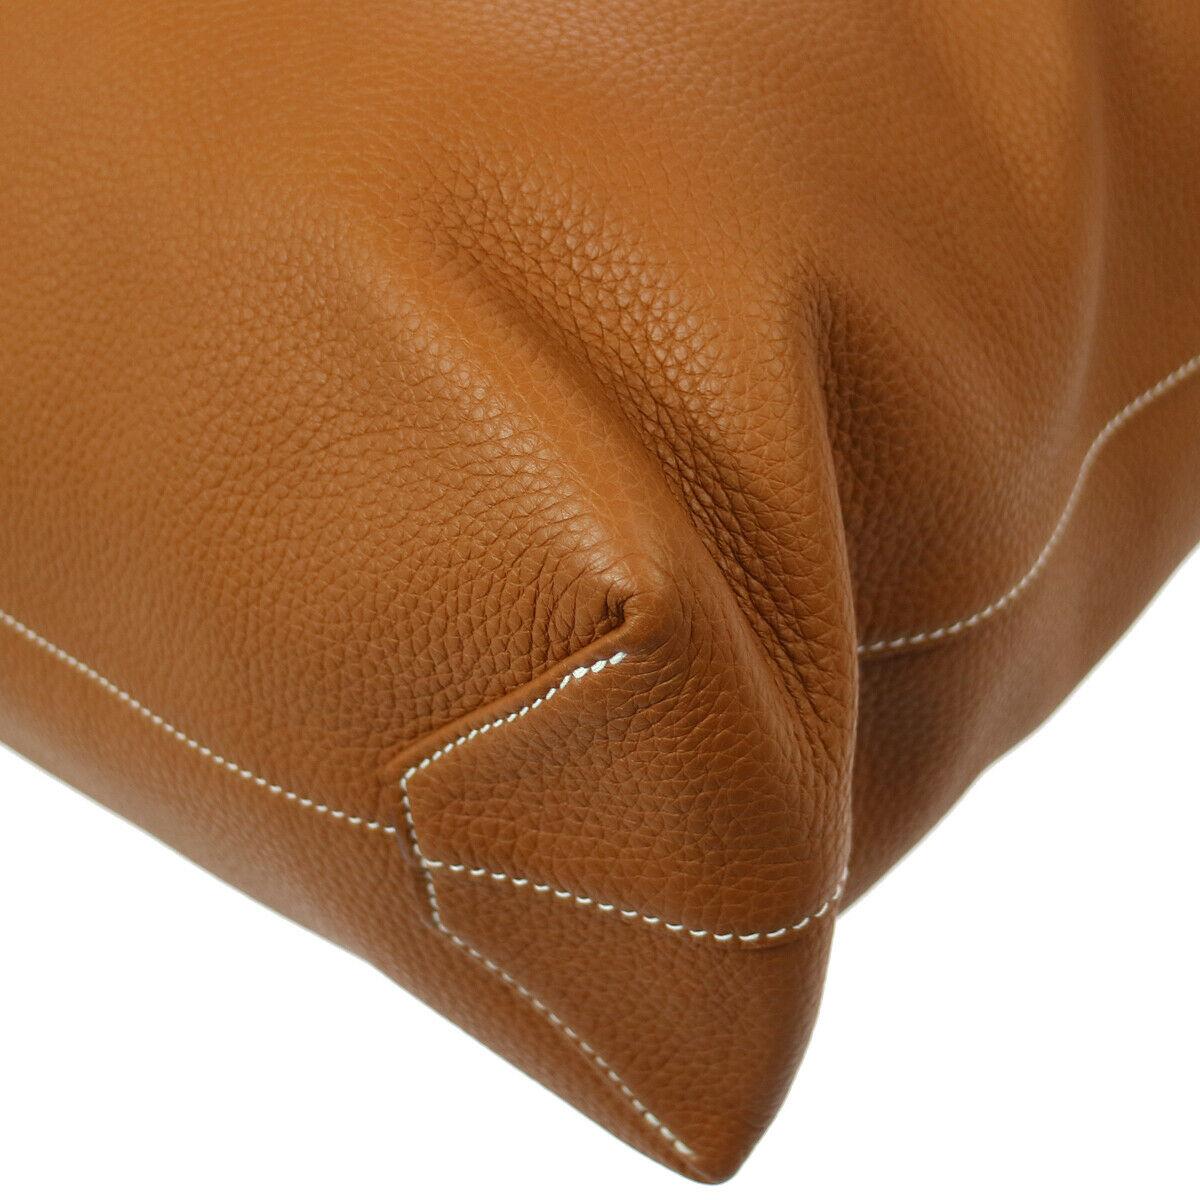  Hermes Cognac Yellow Leather Reversible Carryall Travel Men's Women's Tote Bag 1